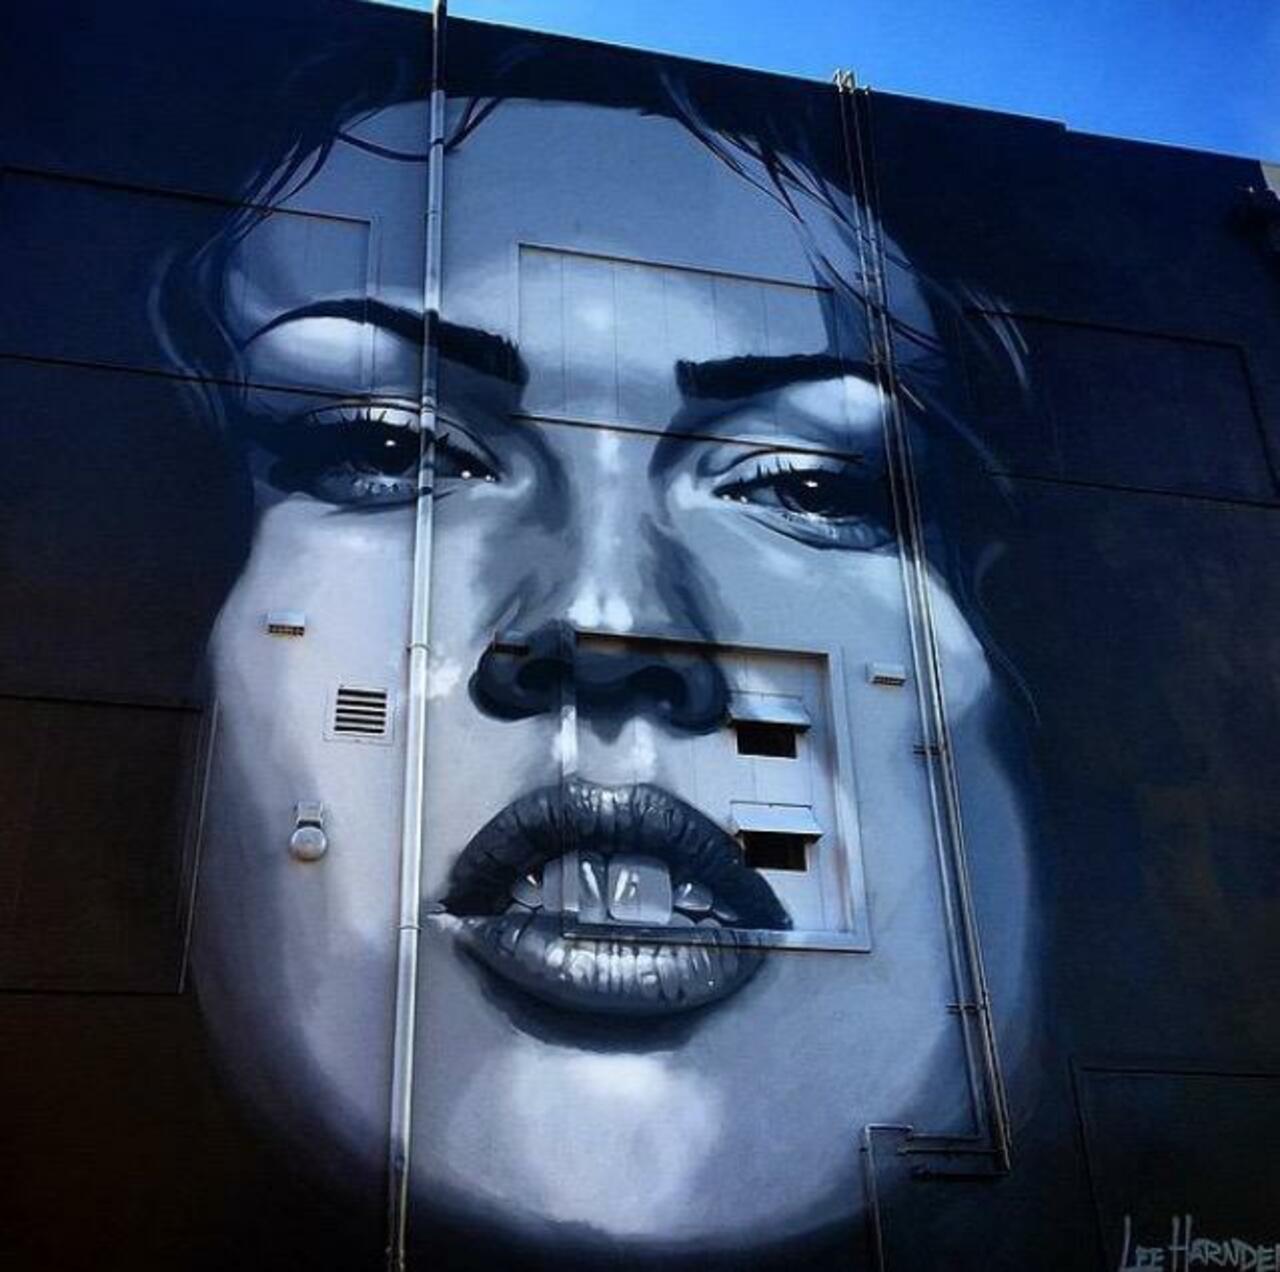 Street Art by Irocka 

#art #graffiti #mural #streetart http://t.co/NE6RGWUgXW